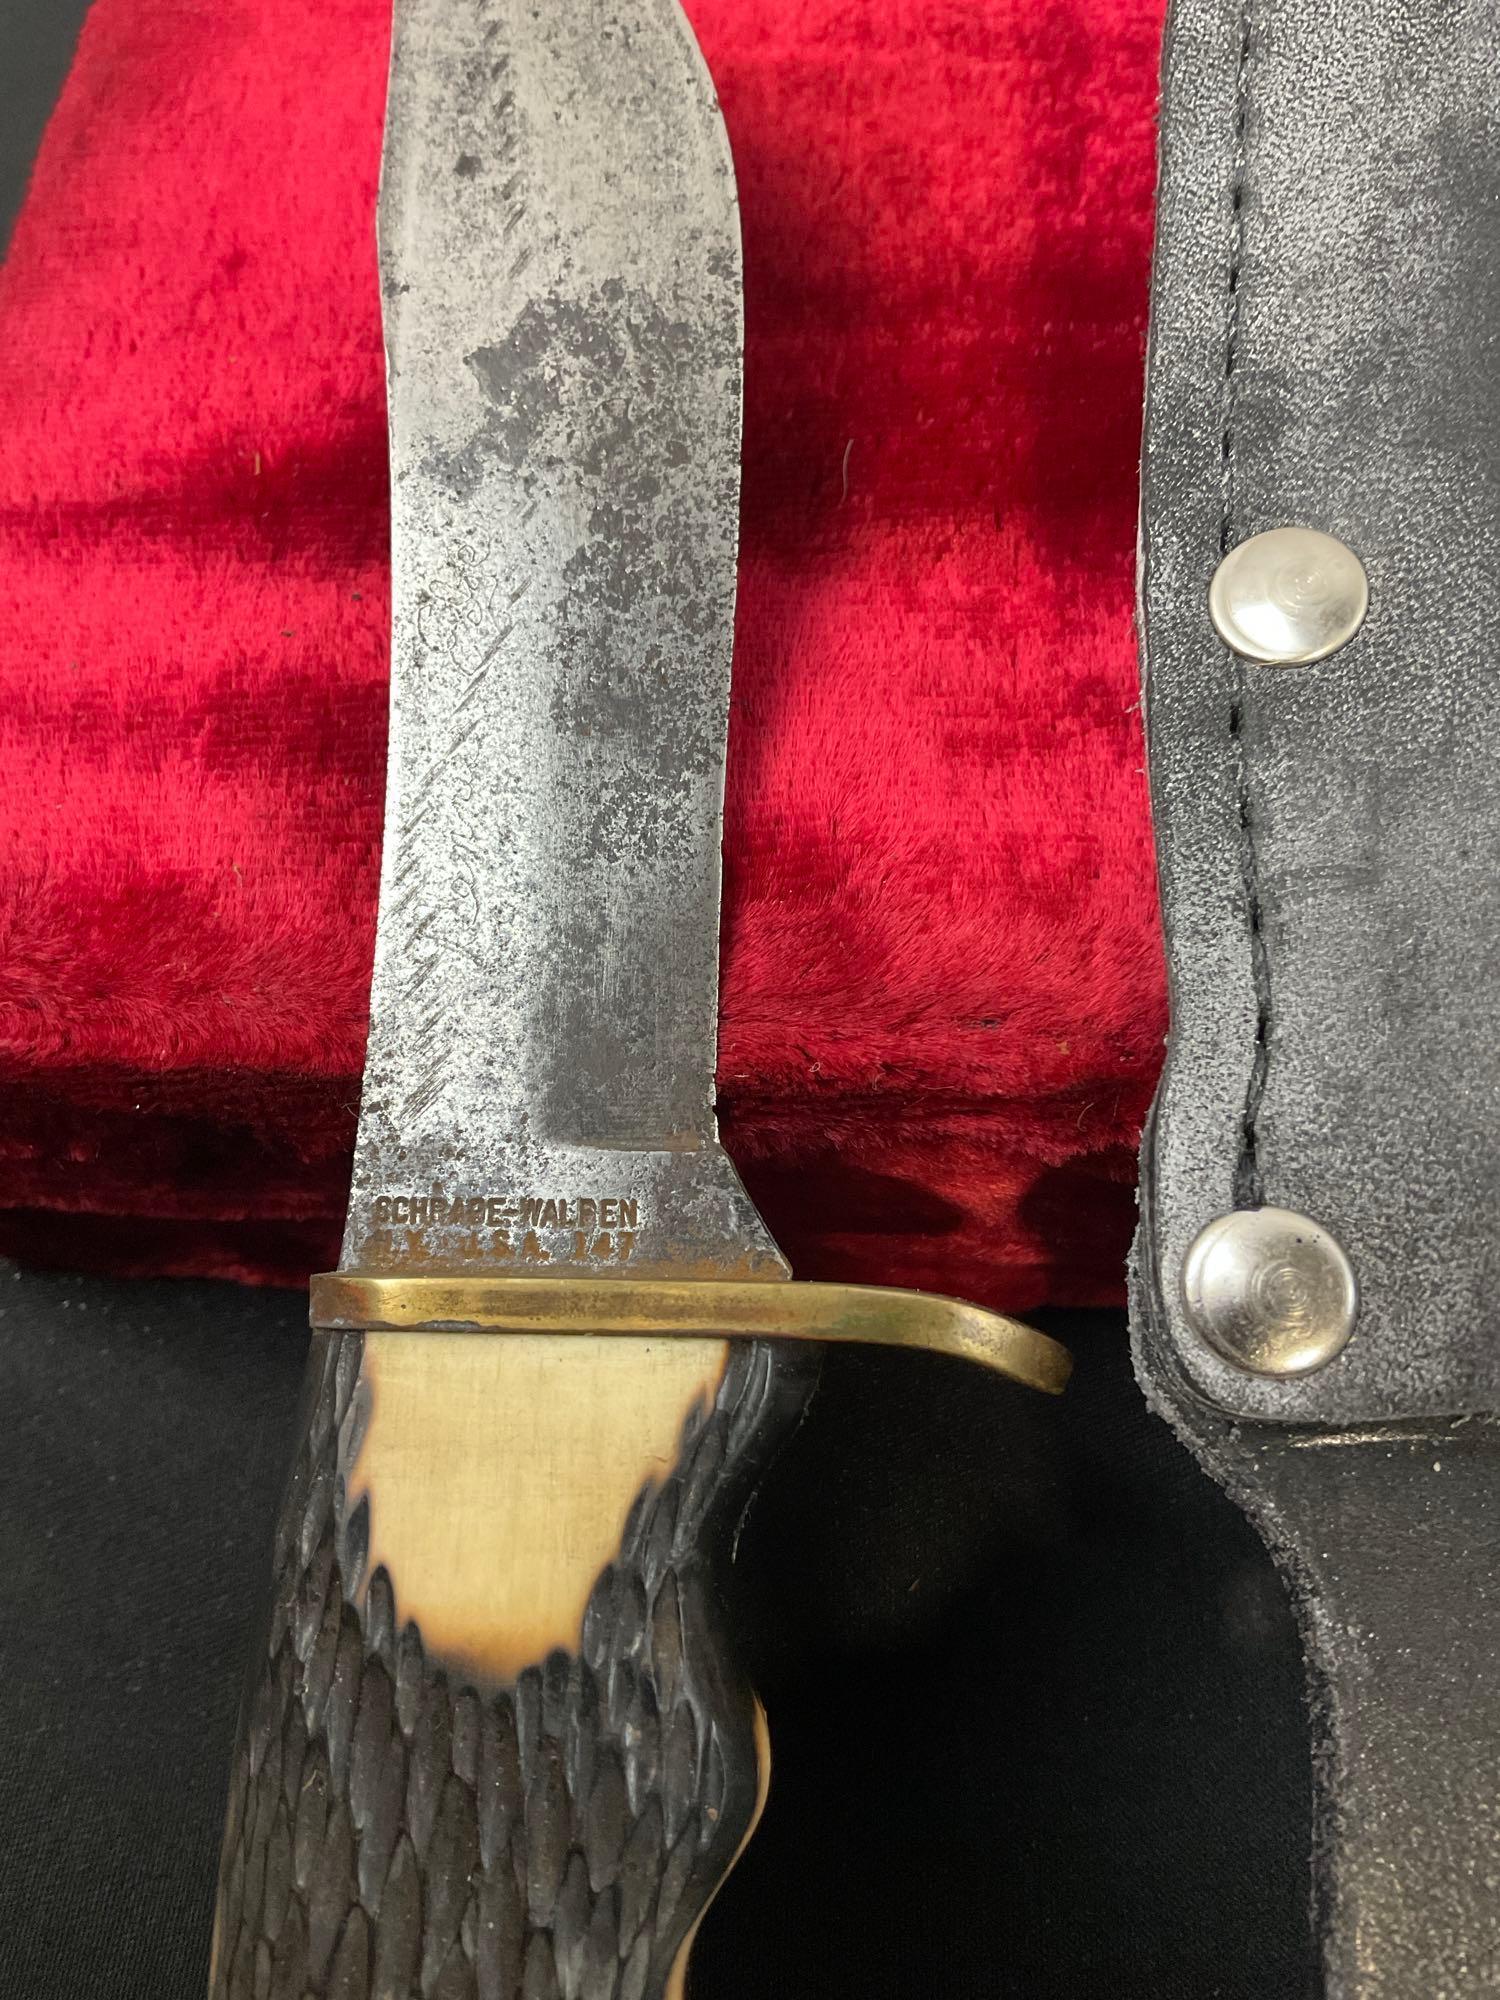 Vintage Fixed Blade Knives, Schrade-Walden 147 Hunters Companion & Schrade Heritage w/ Sheaths